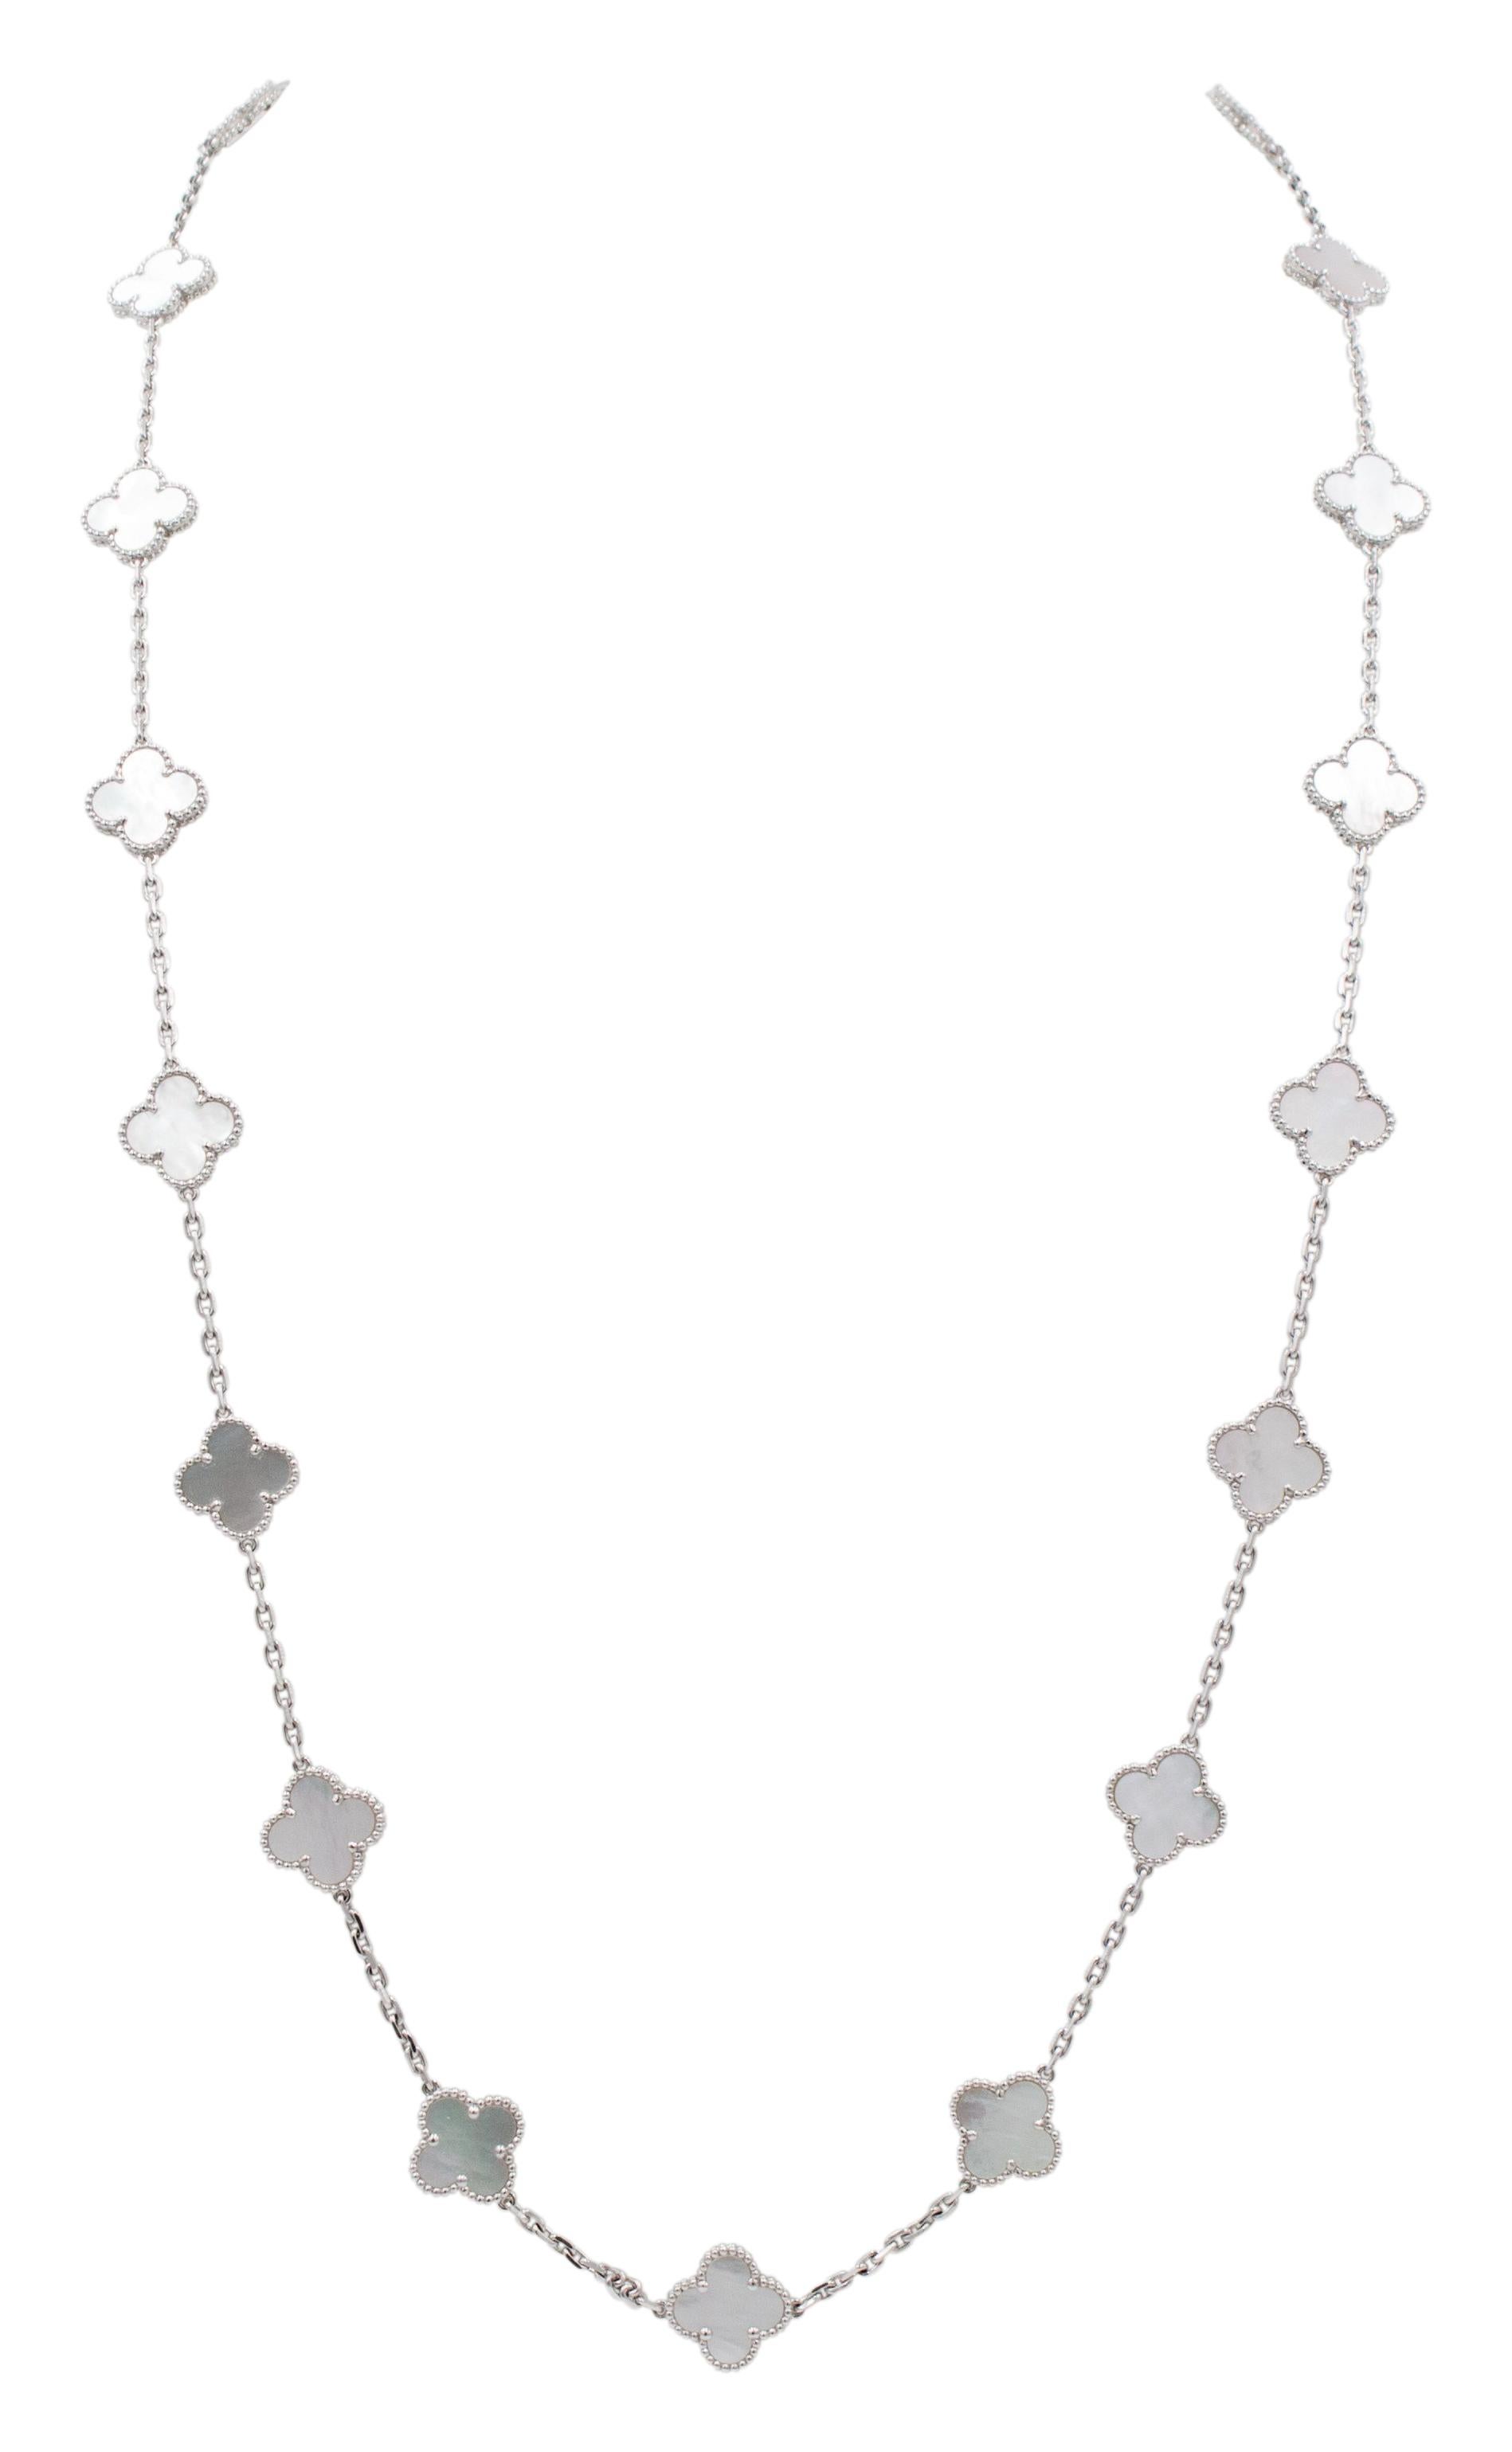 20 motif necklace price